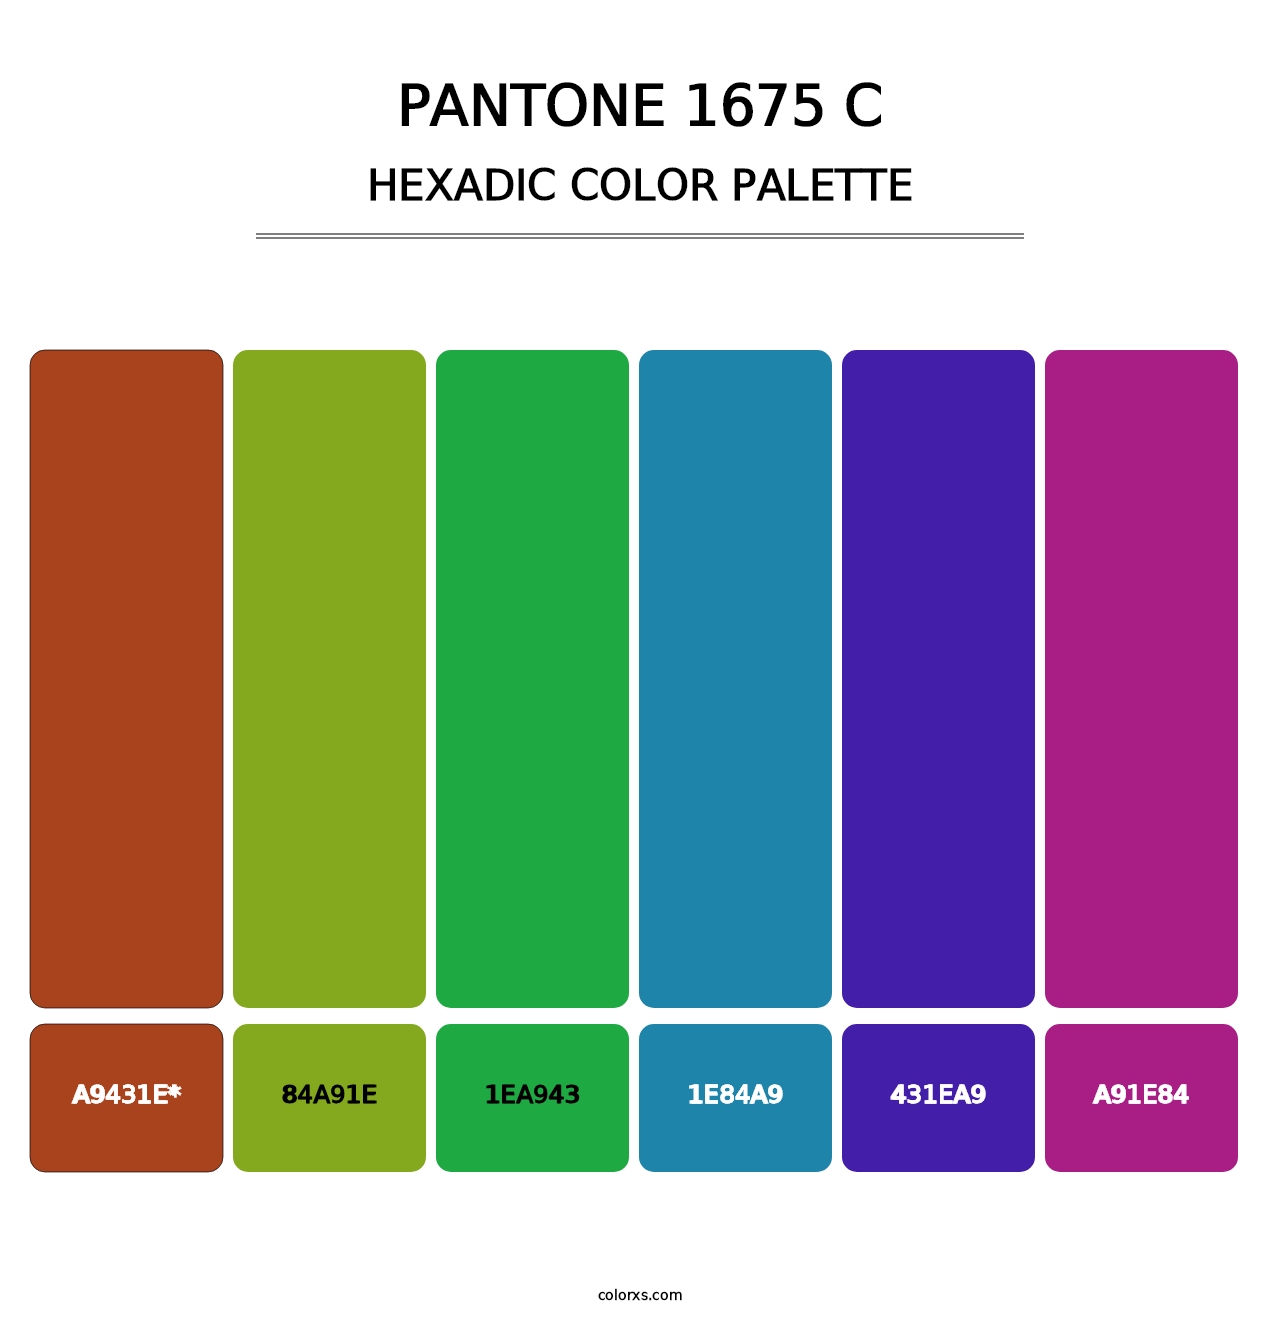 PANTONE 1675 C - Hexadic Color Palette